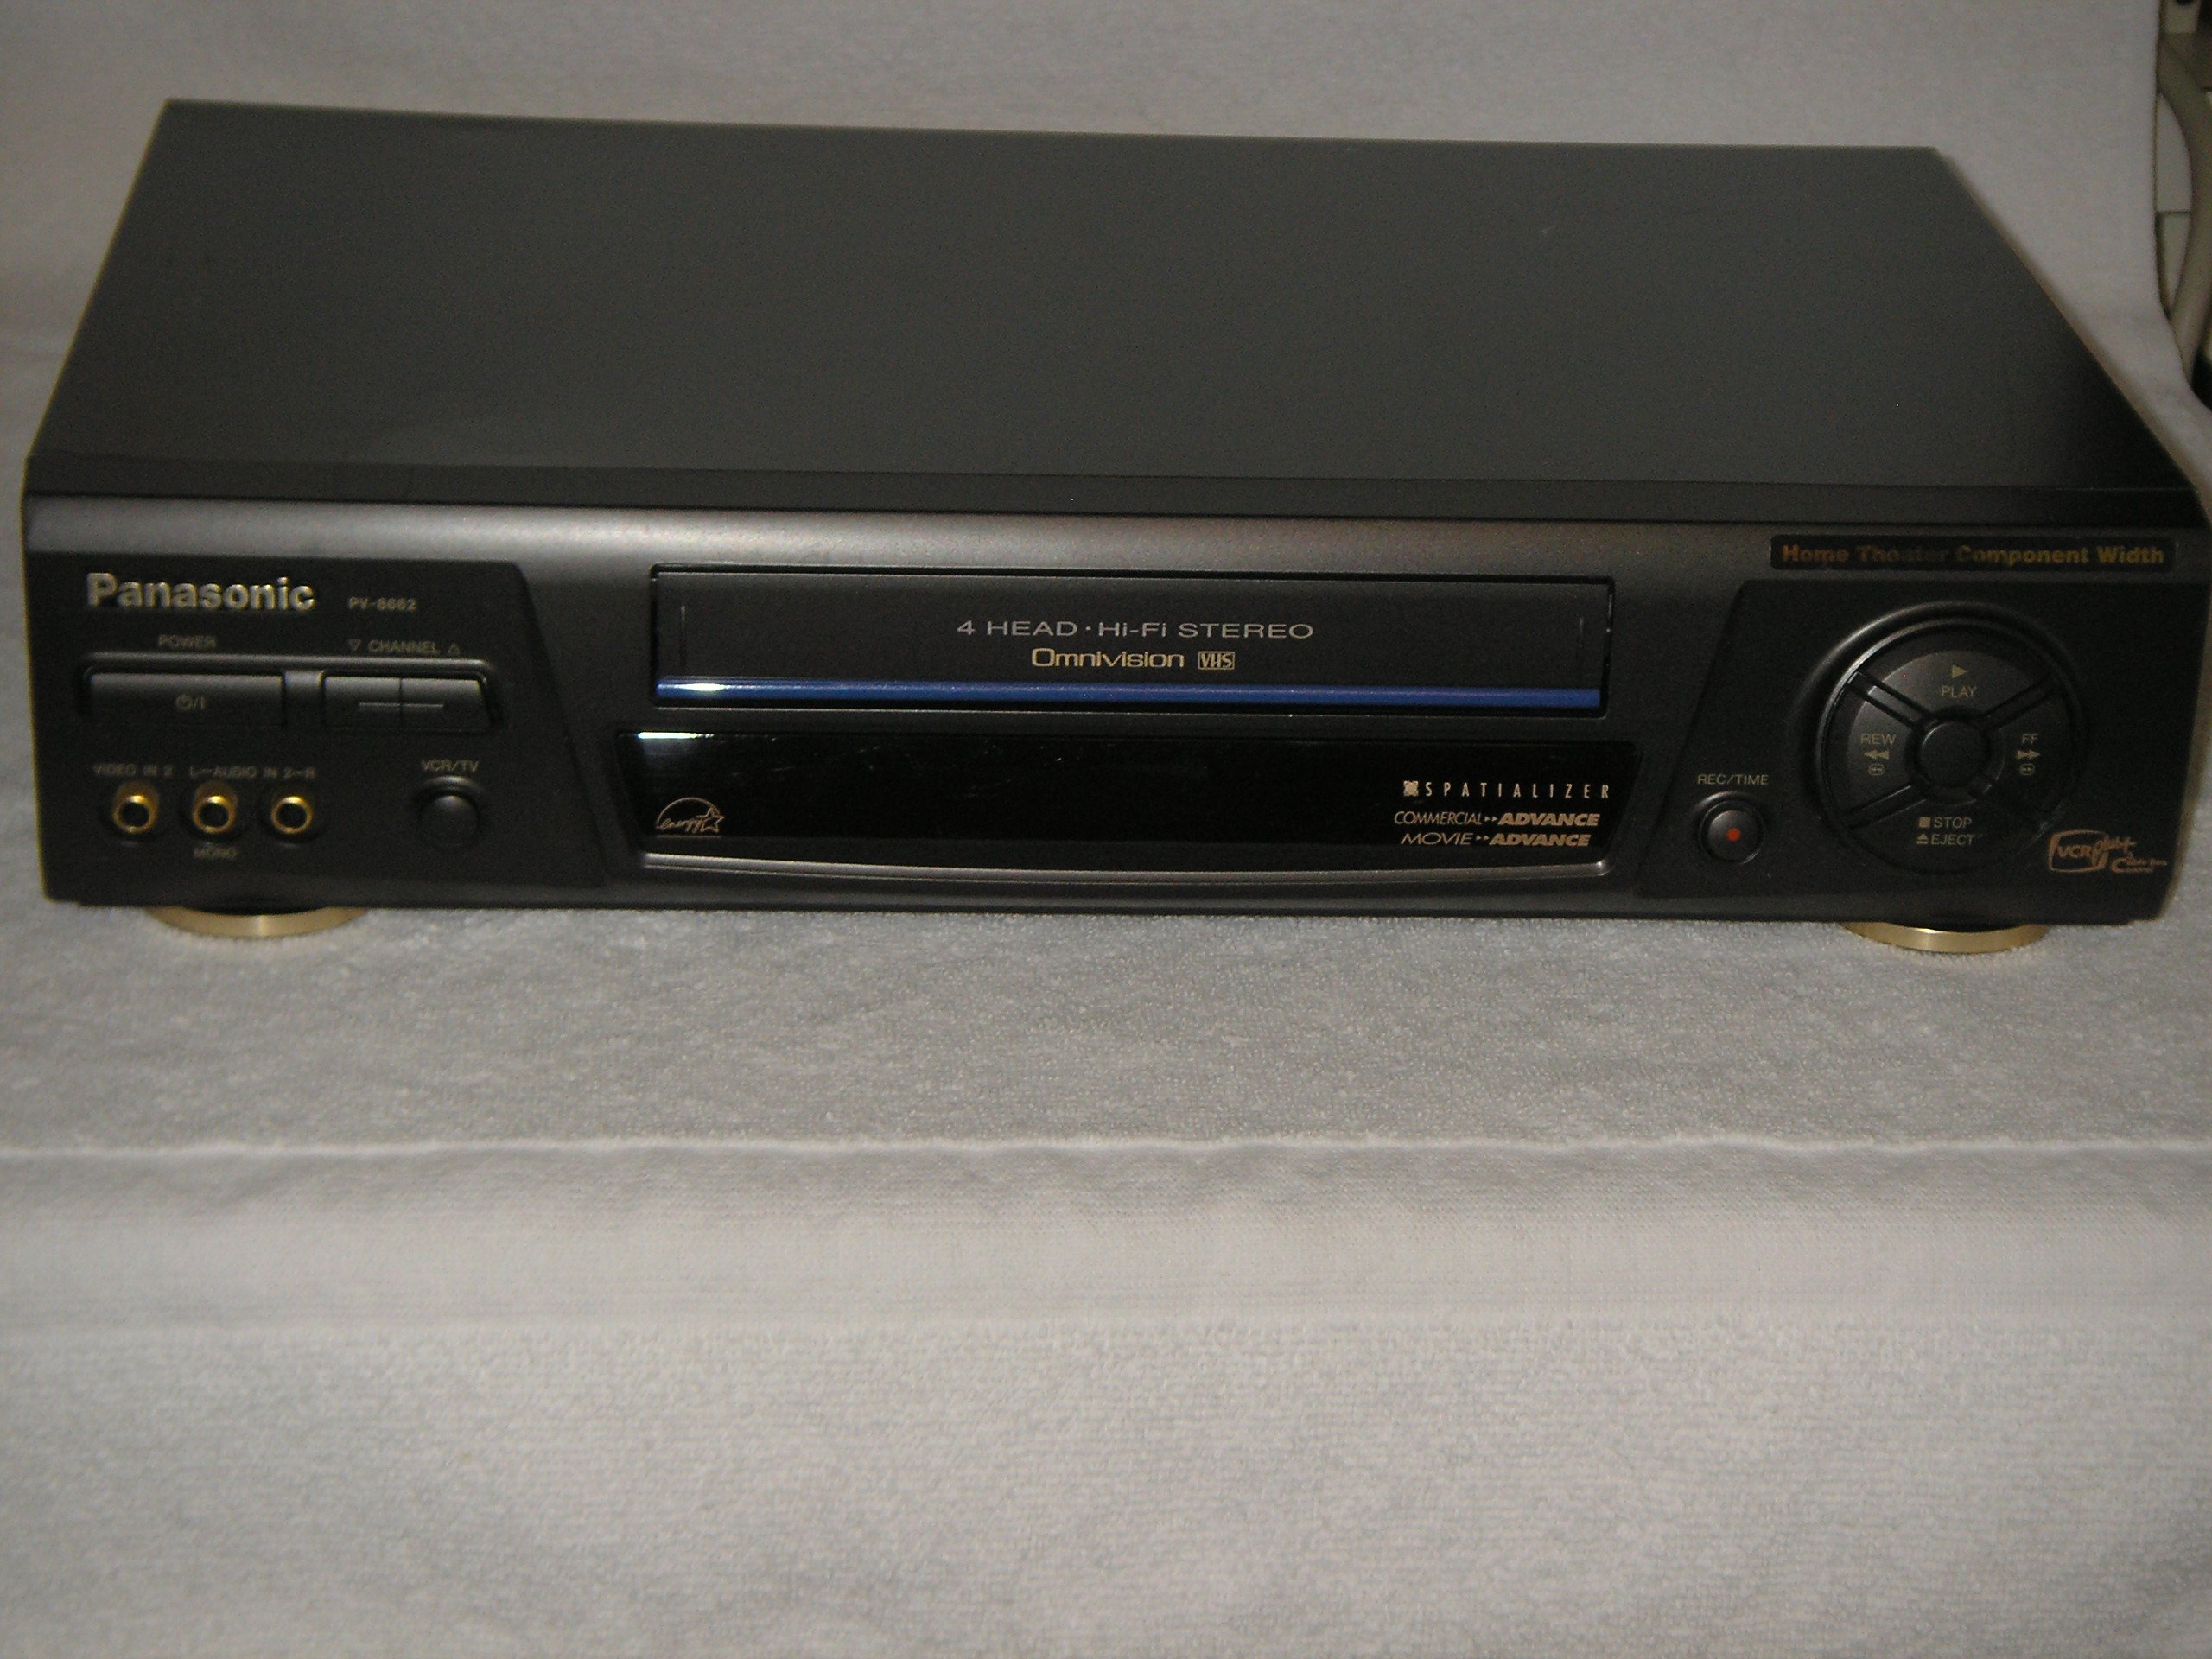 Panasonic Omnivision 4 Head Hi-Fi Stereo VCR, Model # PV-8662, Perfect!